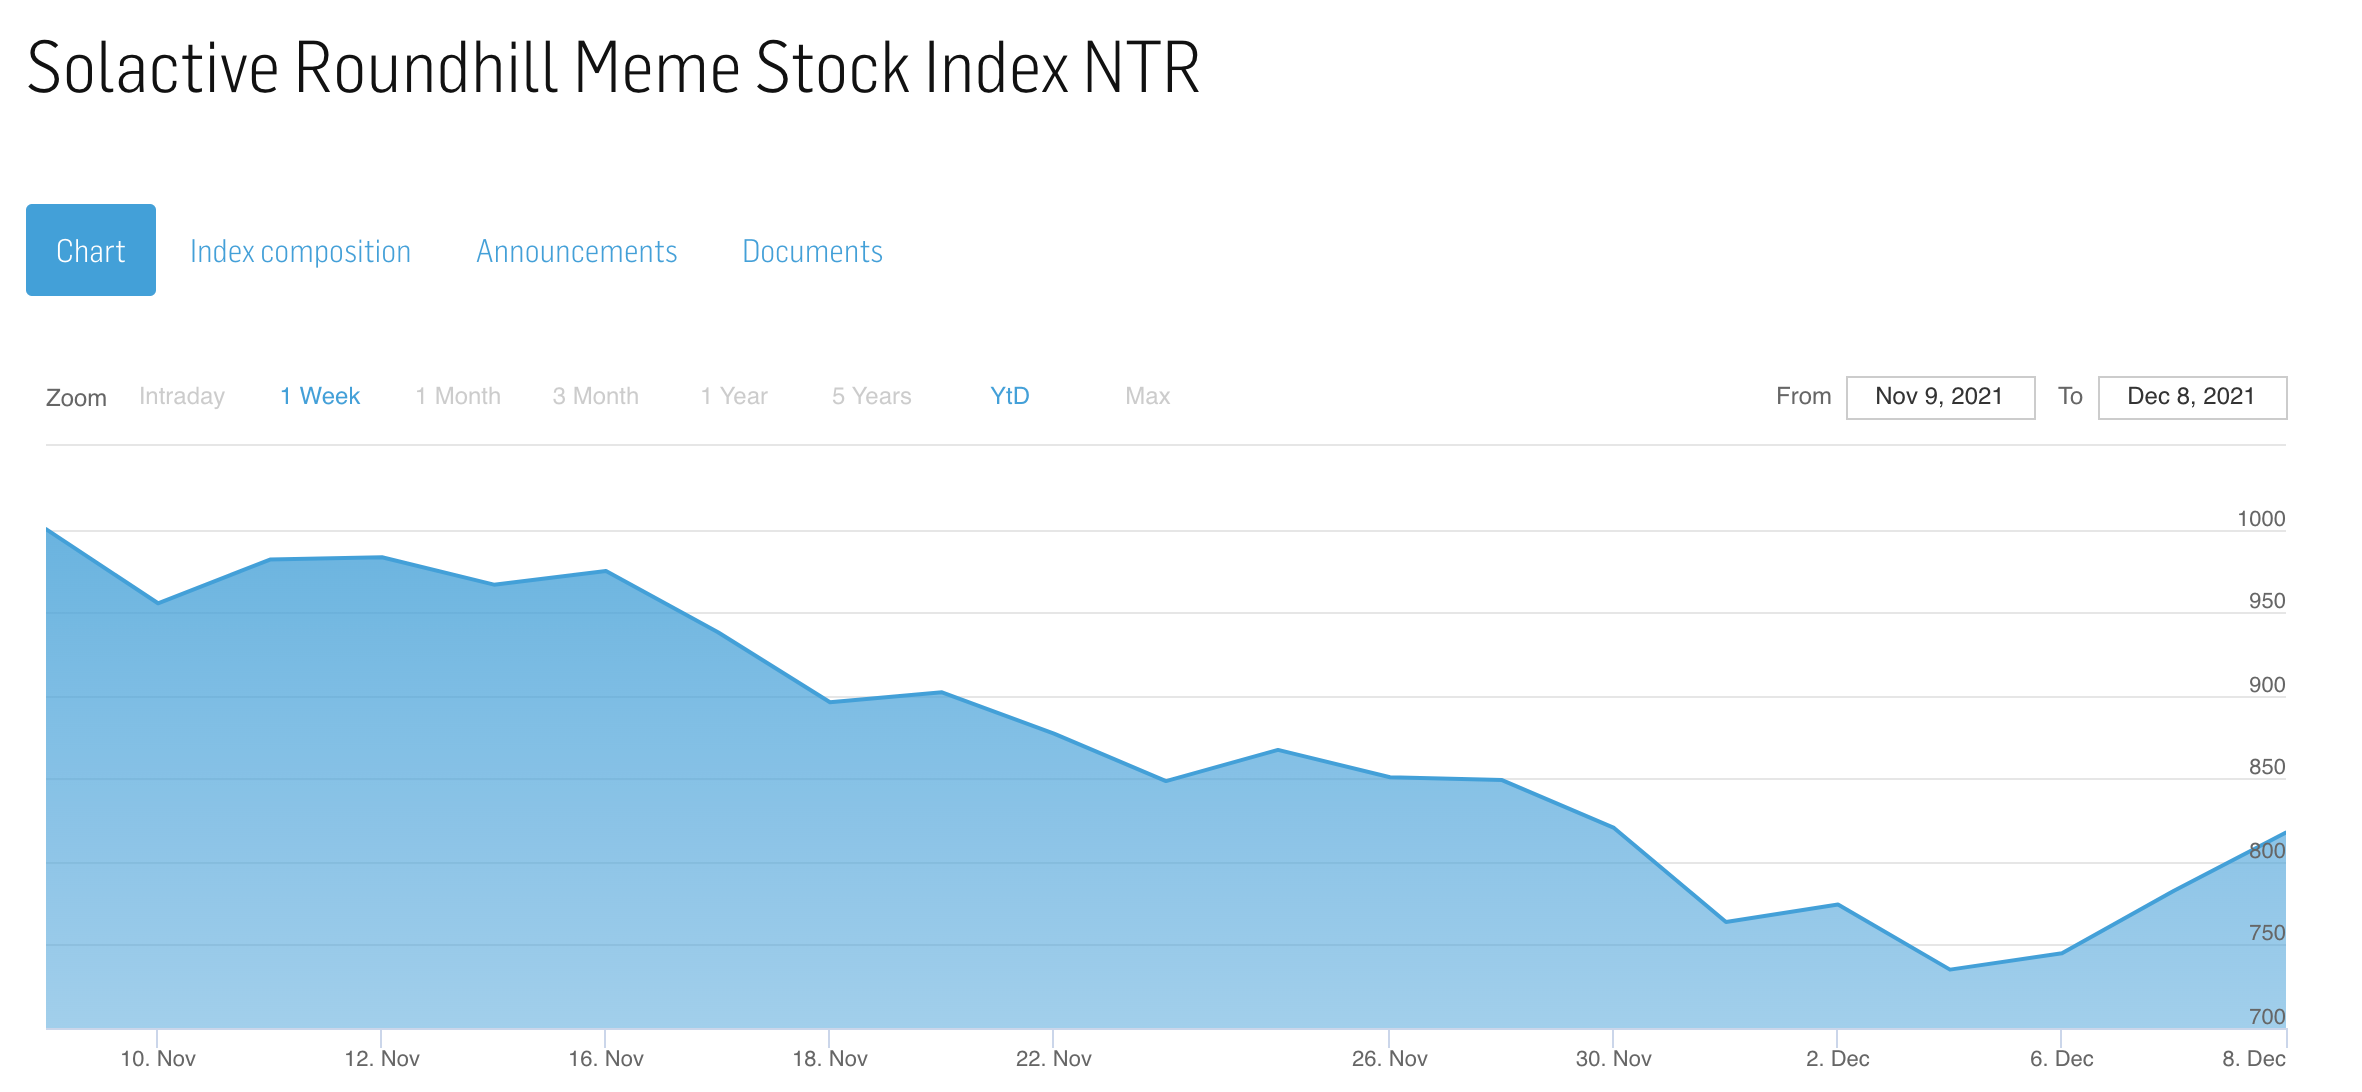 Solactive Roundhill Meme Stock Index NTR